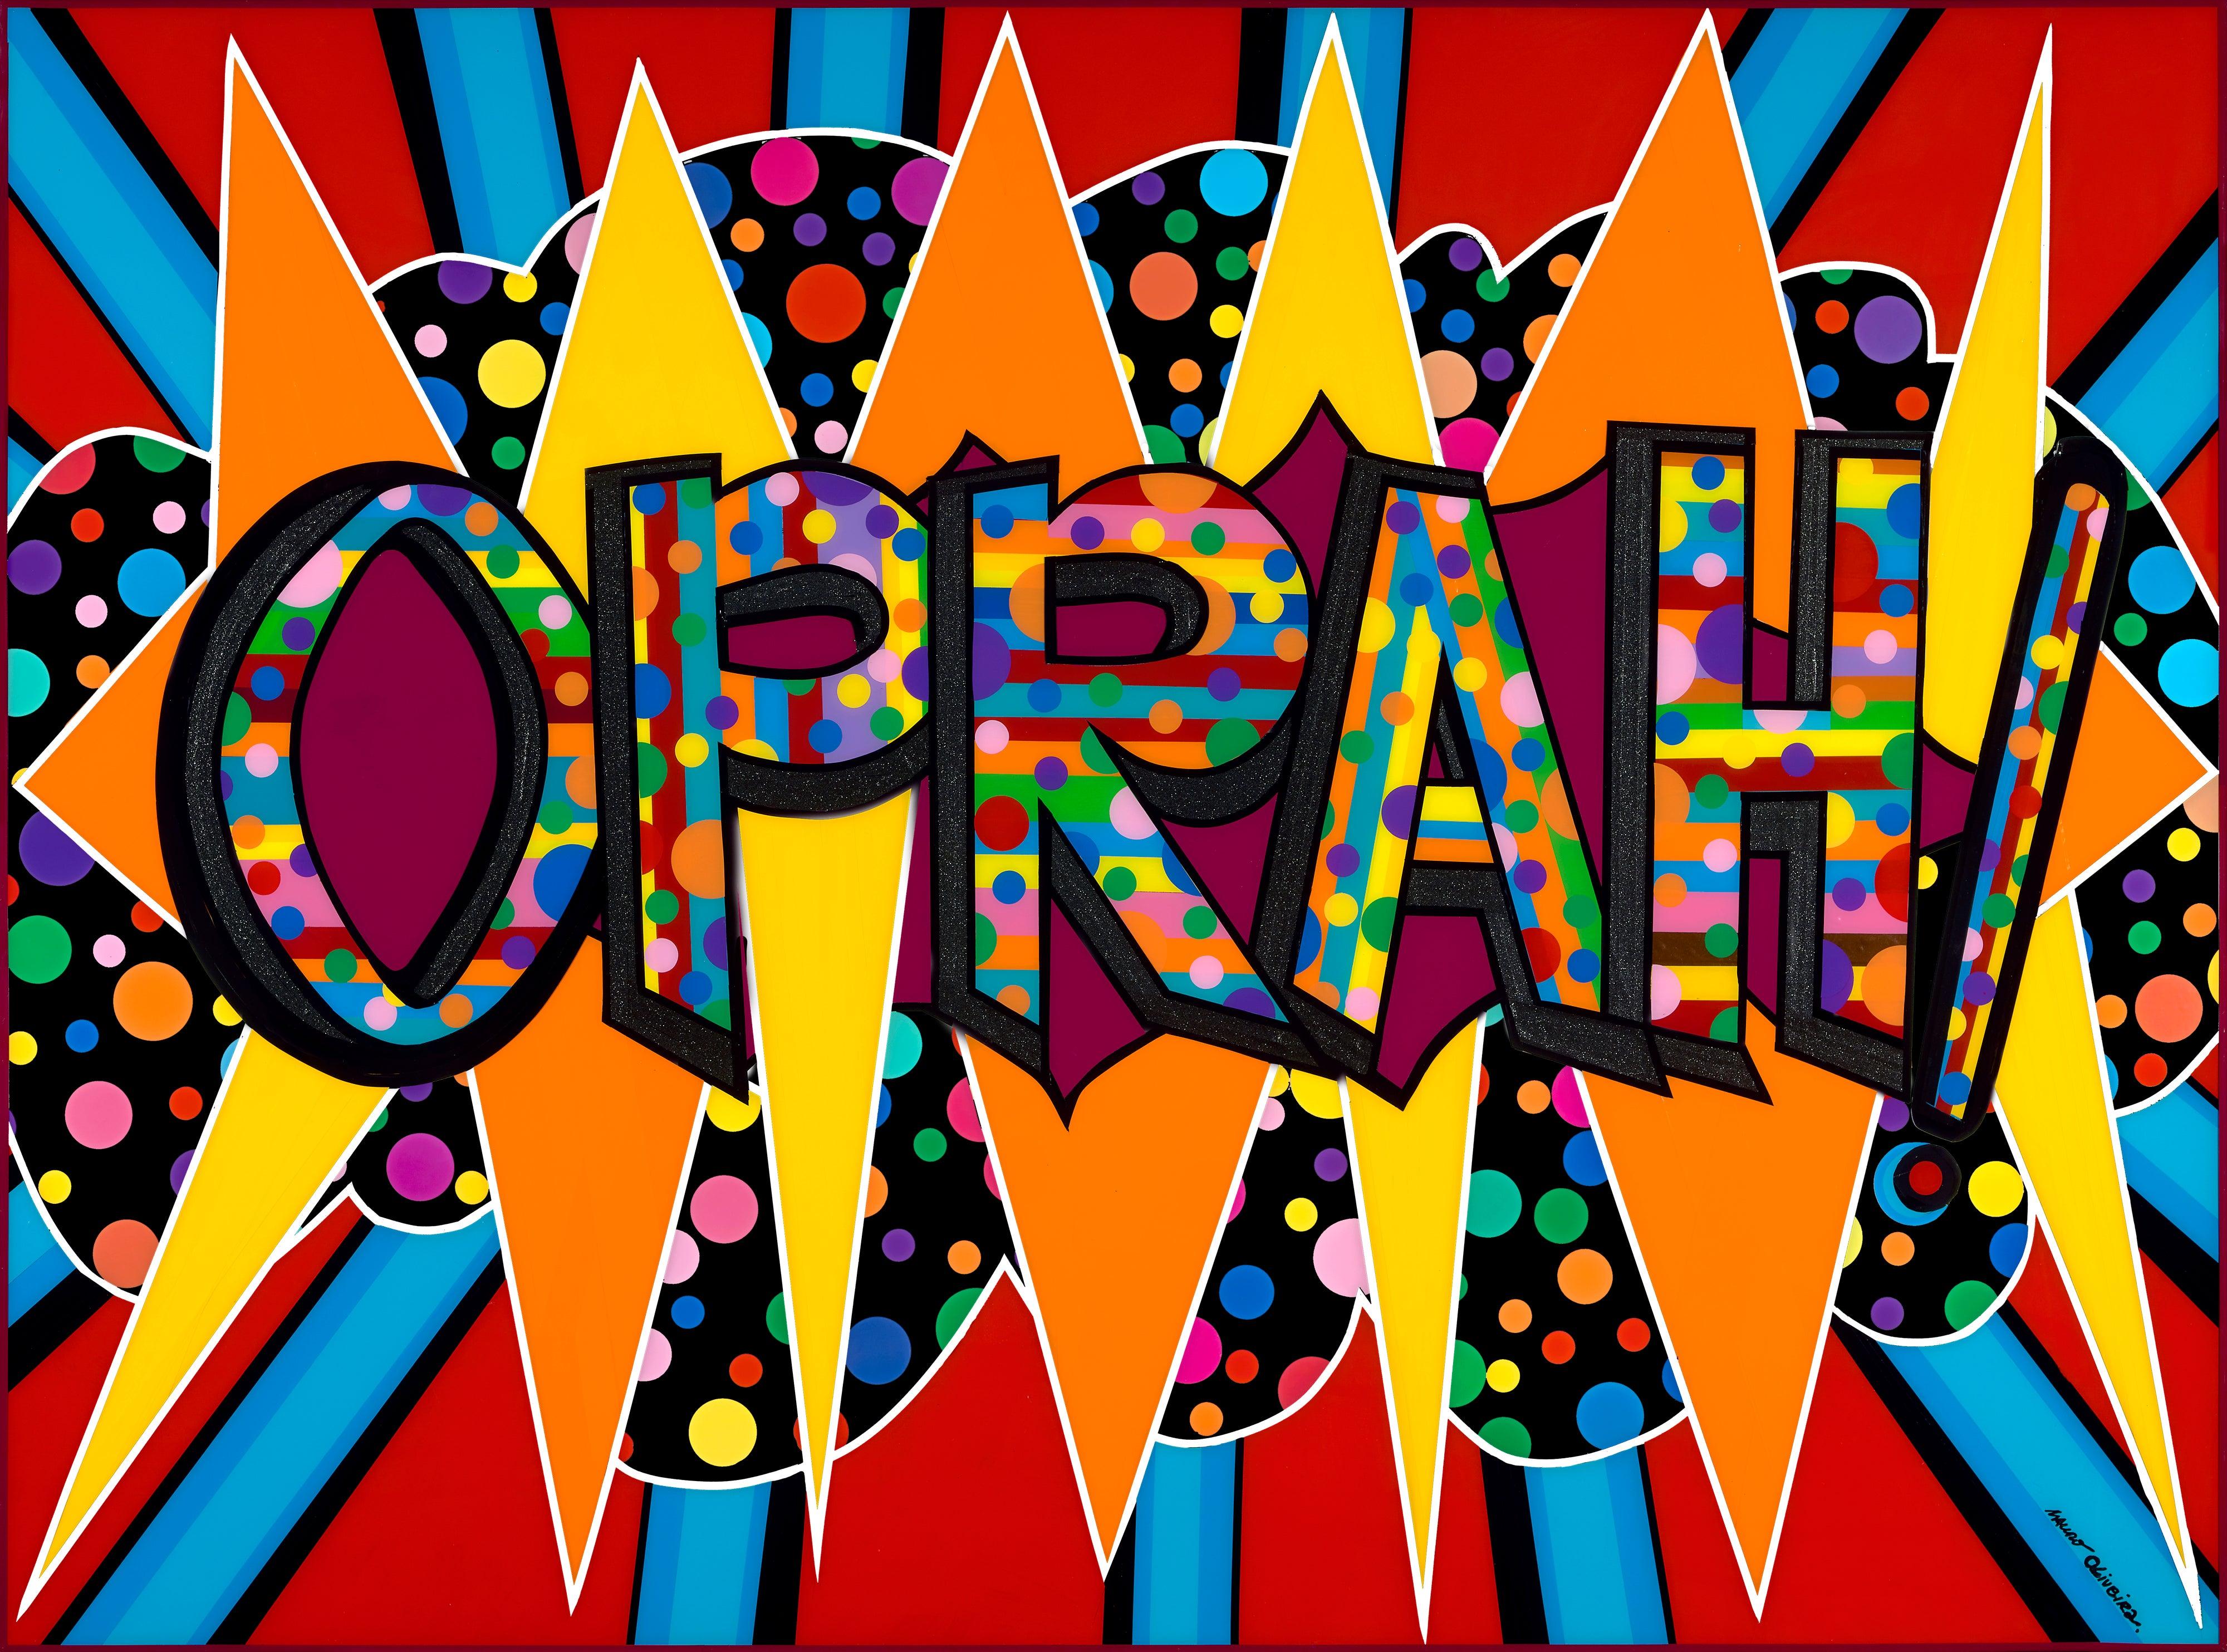 Oprah! True Pop Icon III (Limited Edition Print)